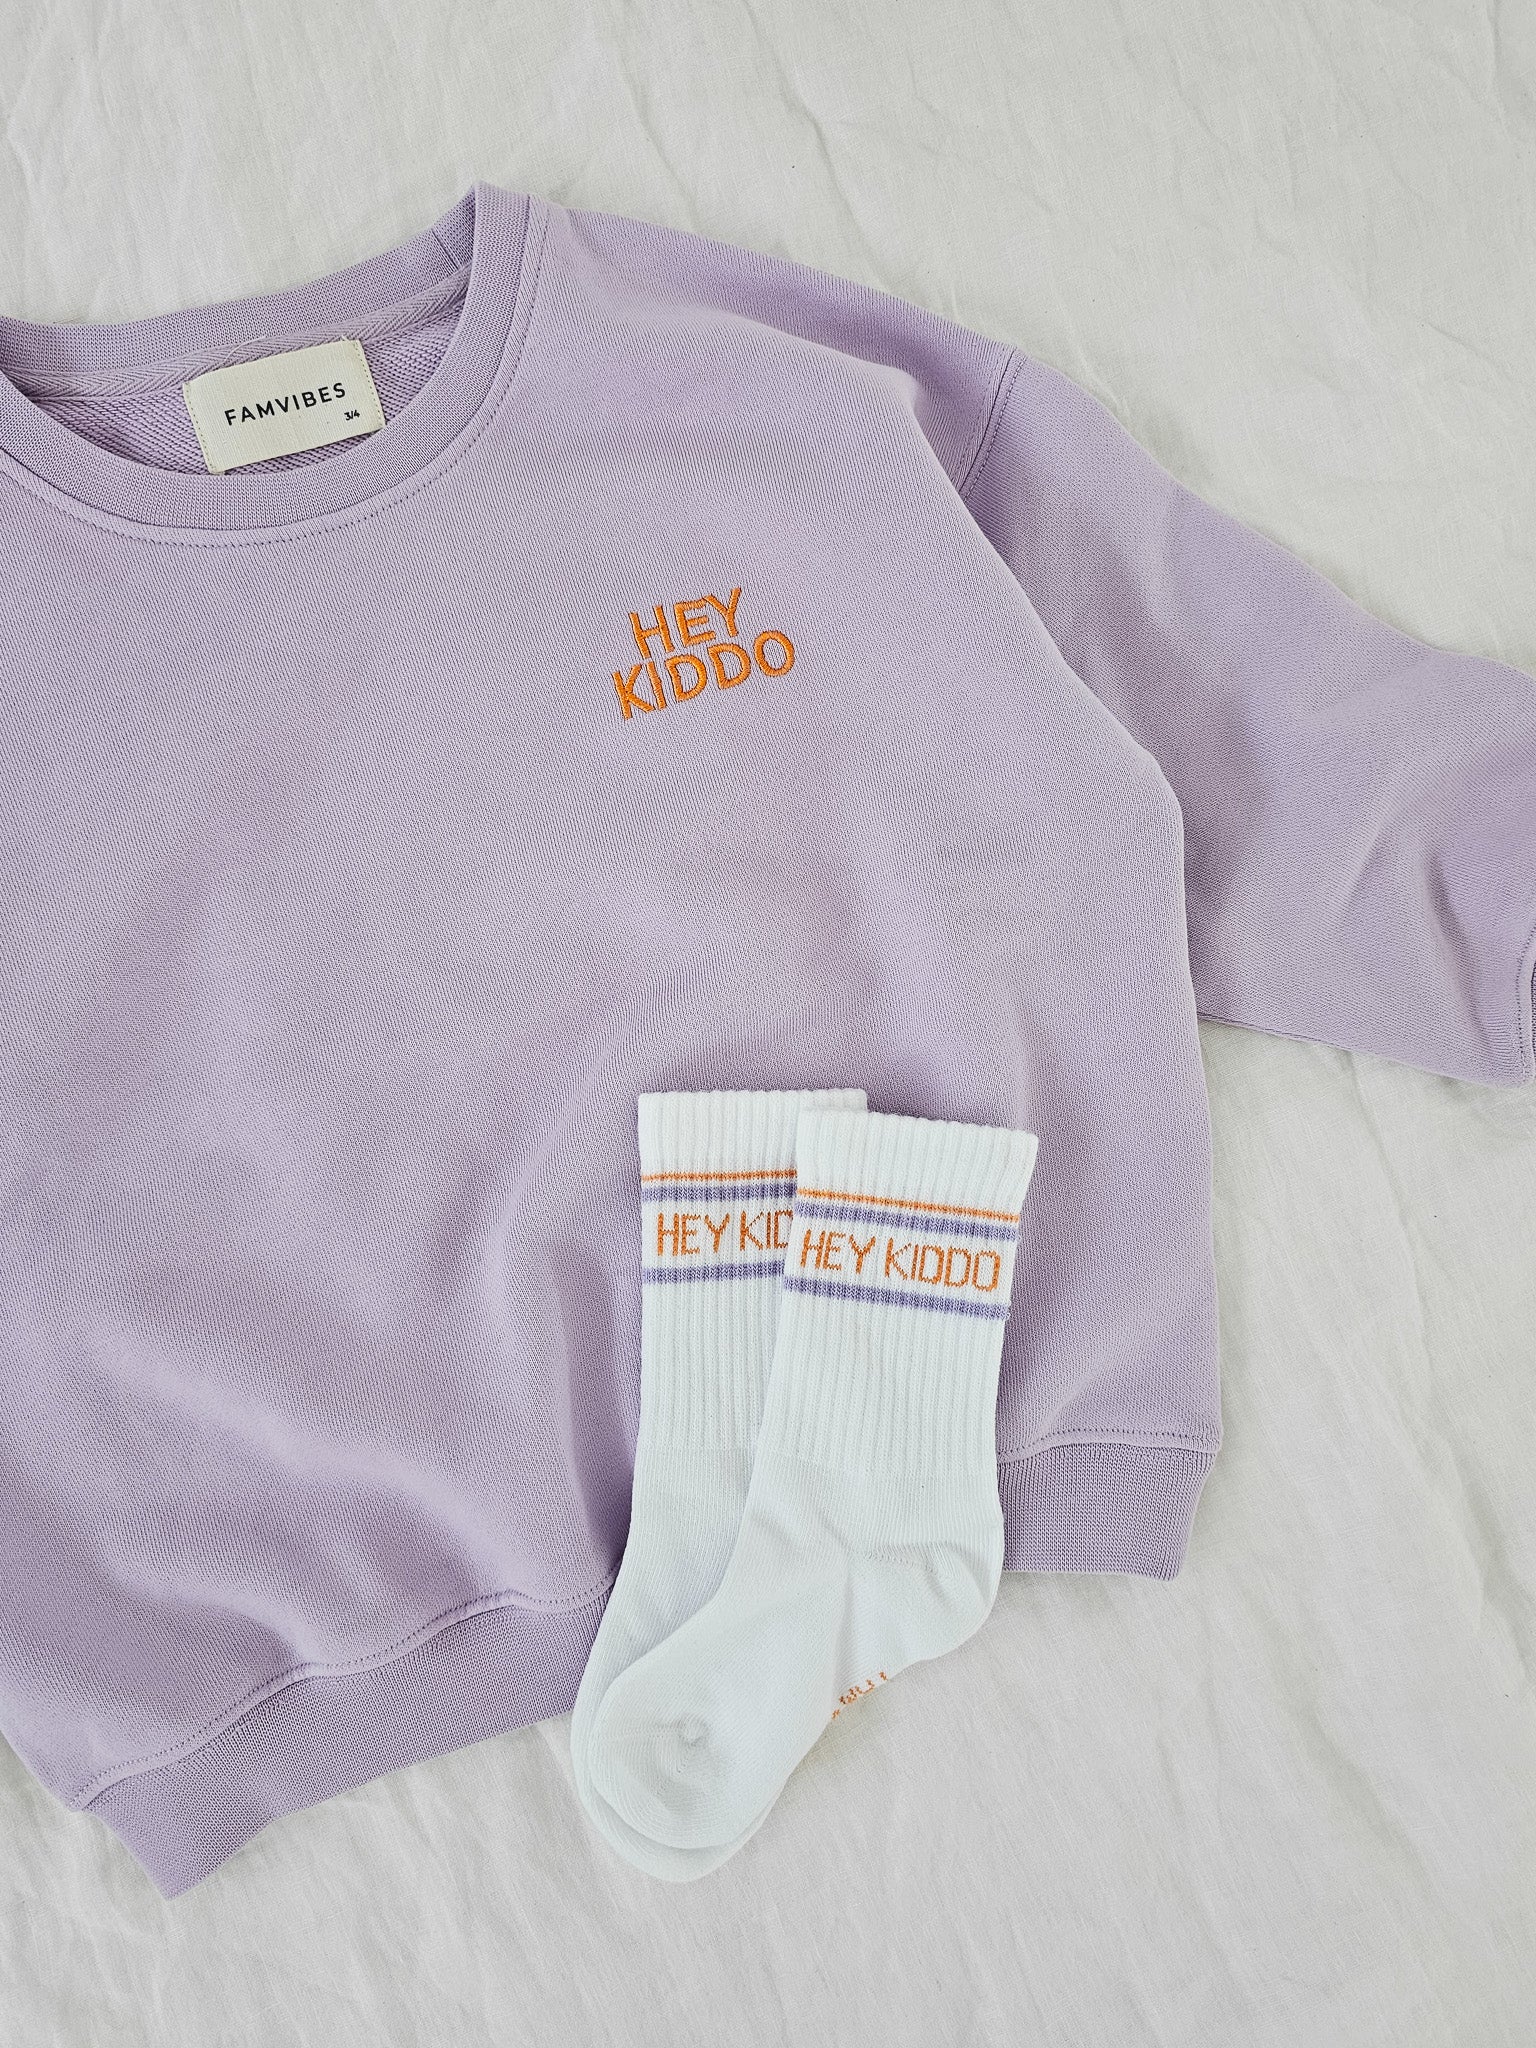 HEY KIDDO - Socken lavender | orange - FAMVIBES 